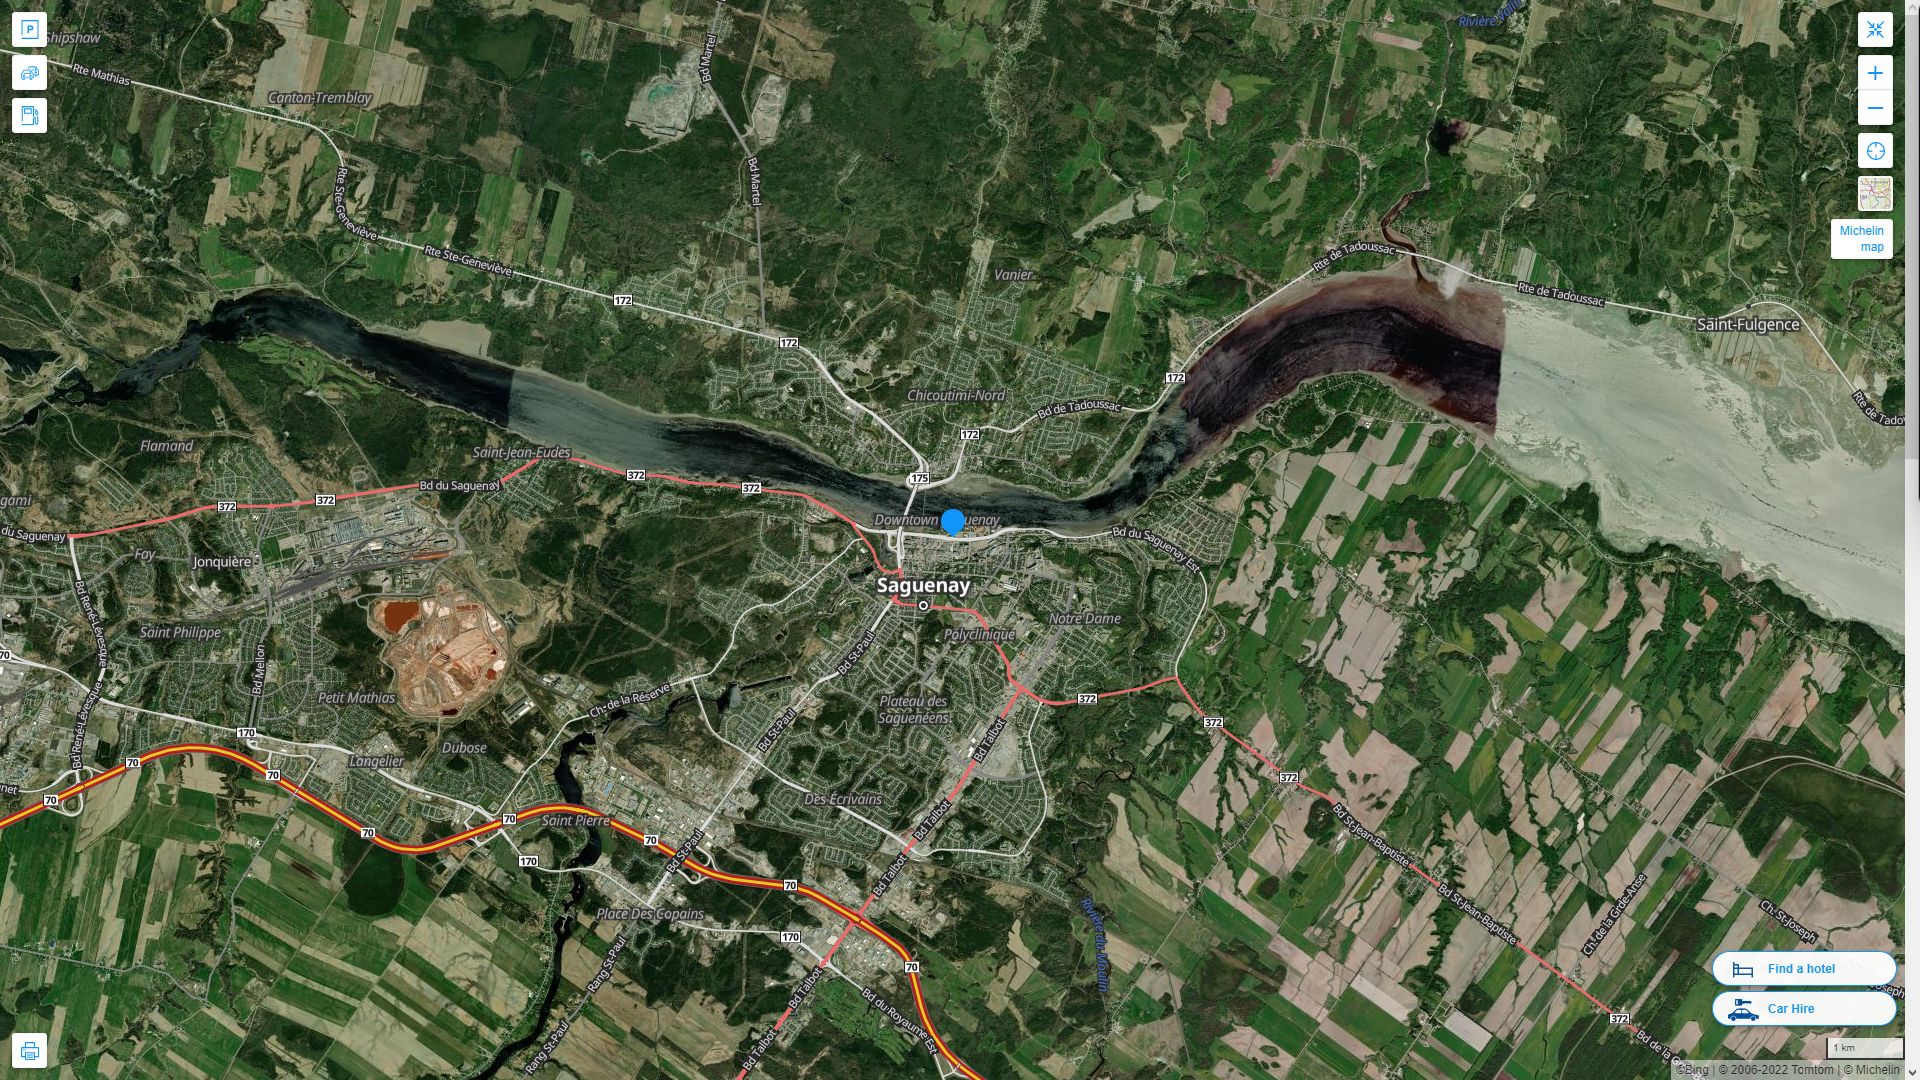 Chicoutimi Jonquiere Canada Autoroute et carte routiere avec vue satellite